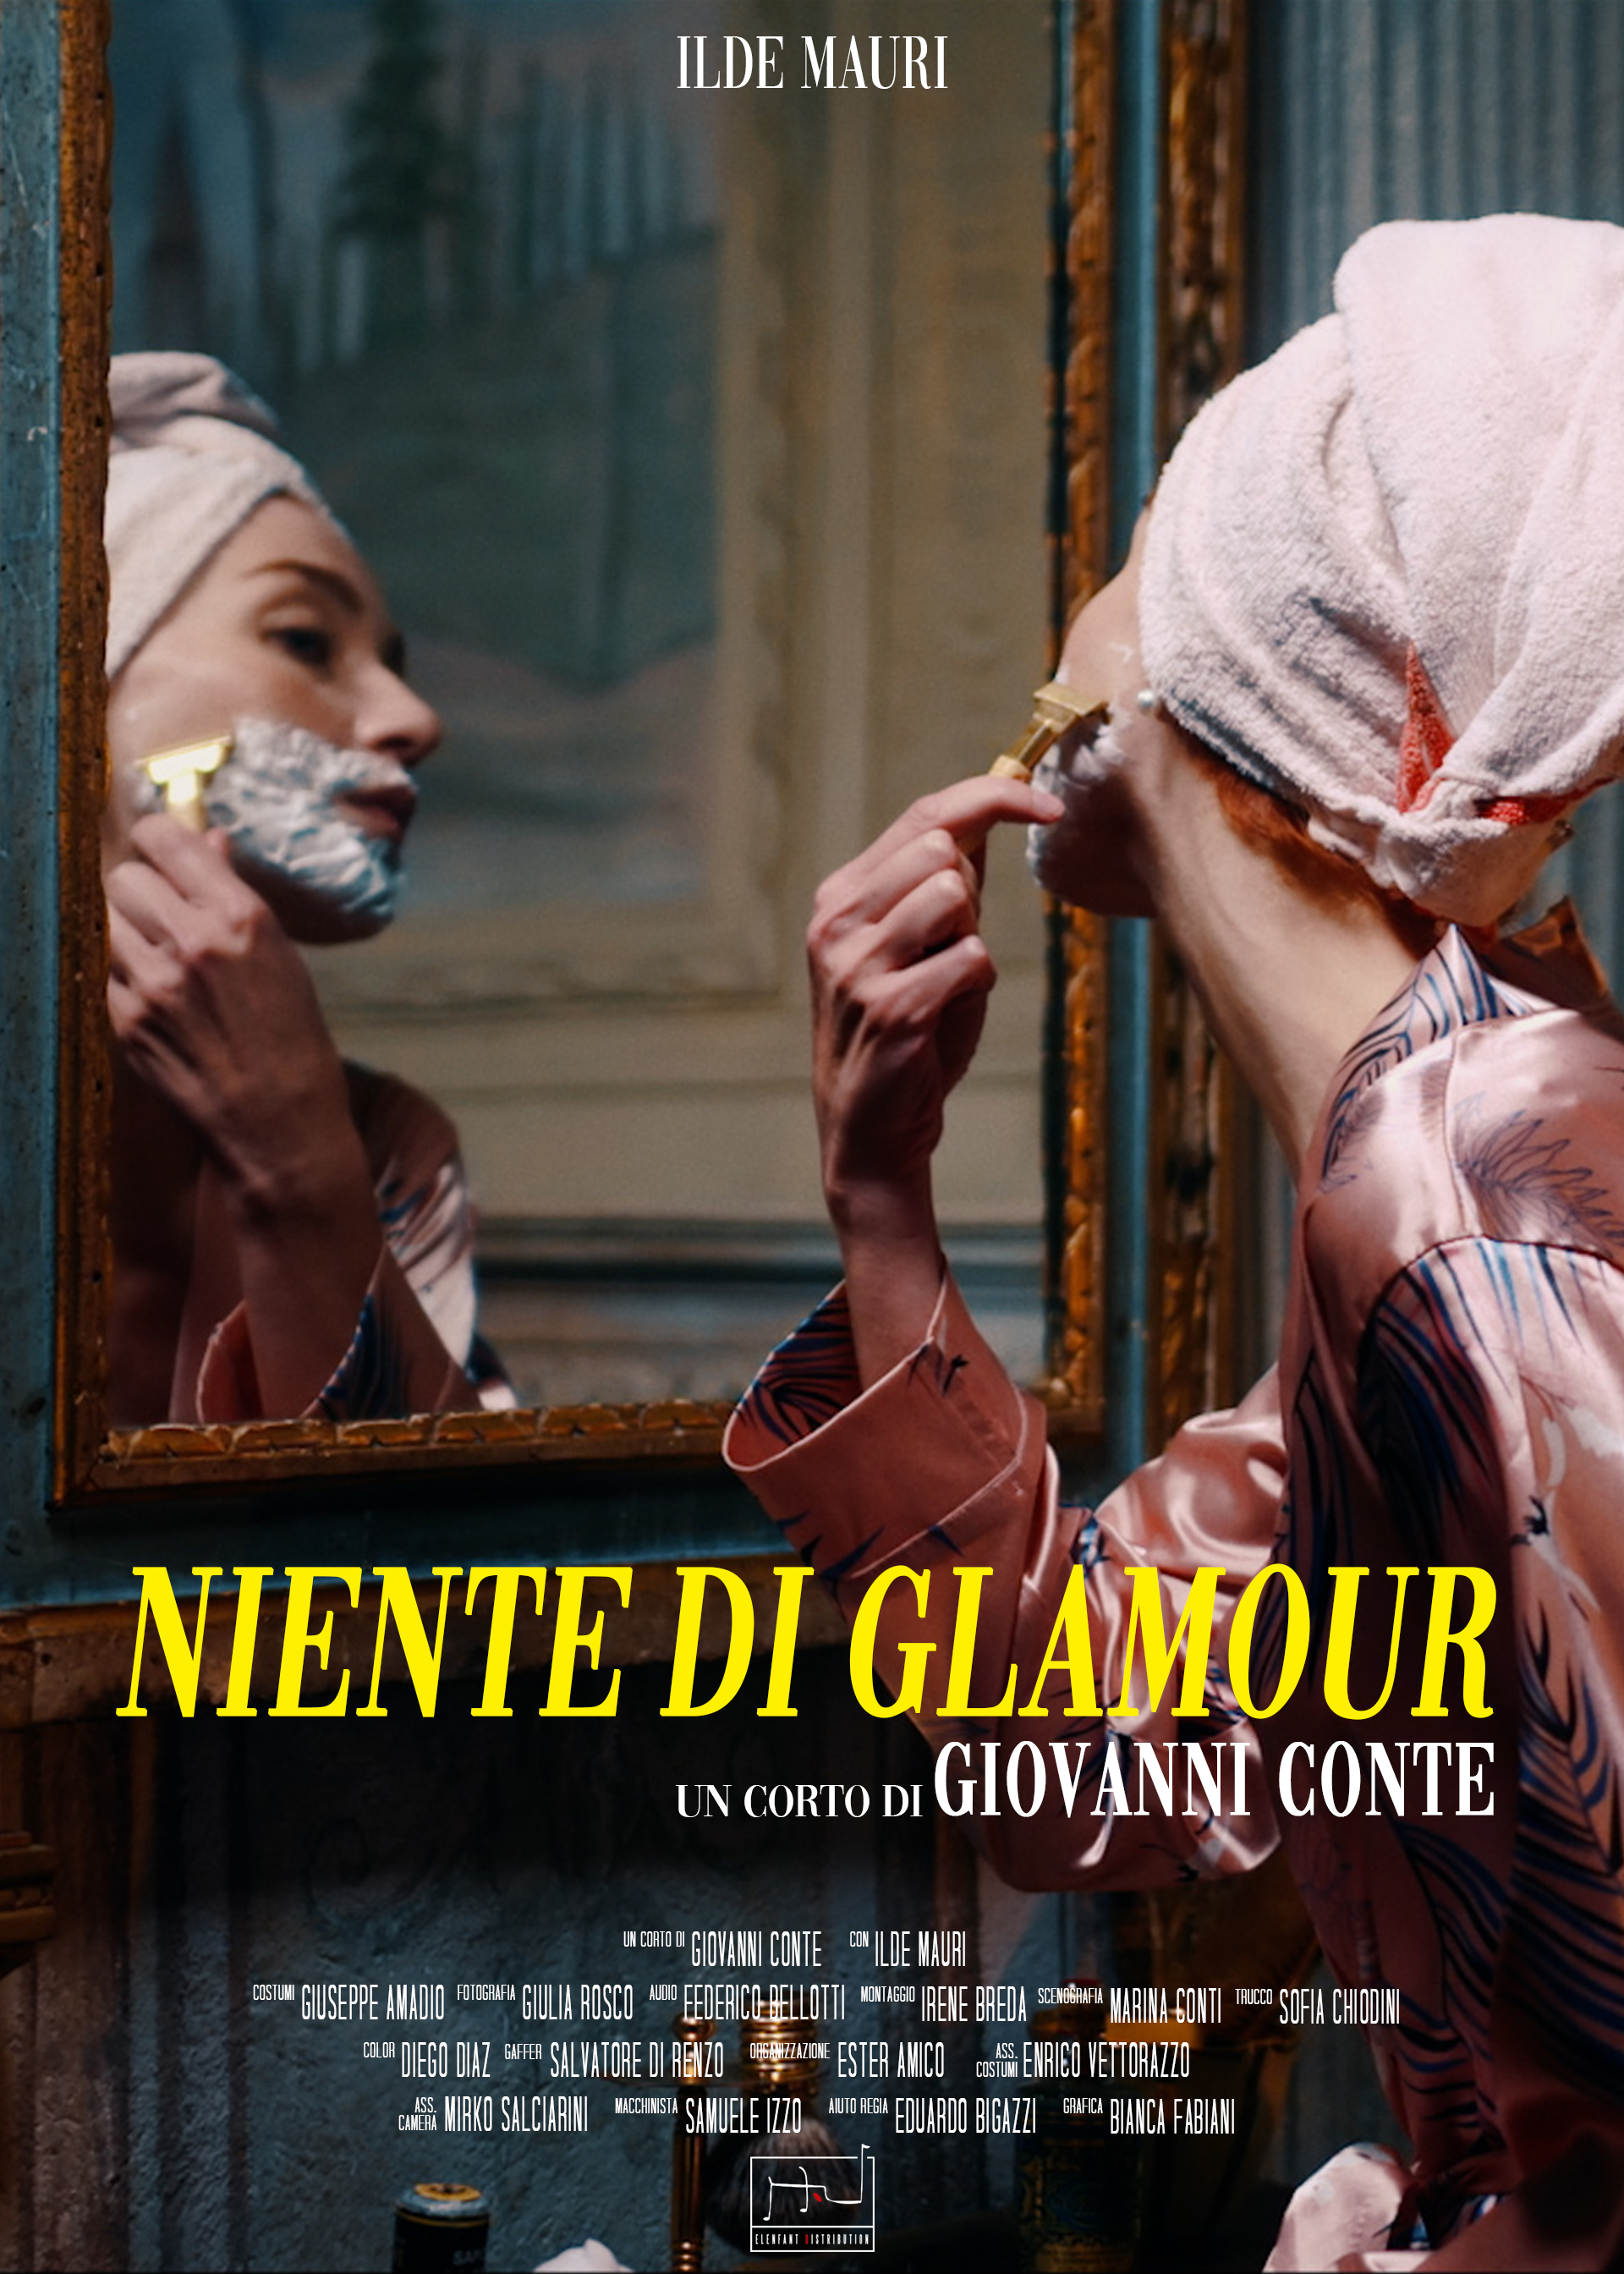 Niente di glamour<h3 style="font-size:10px; line-height:20px;"> di Giovanni Conte</h3>